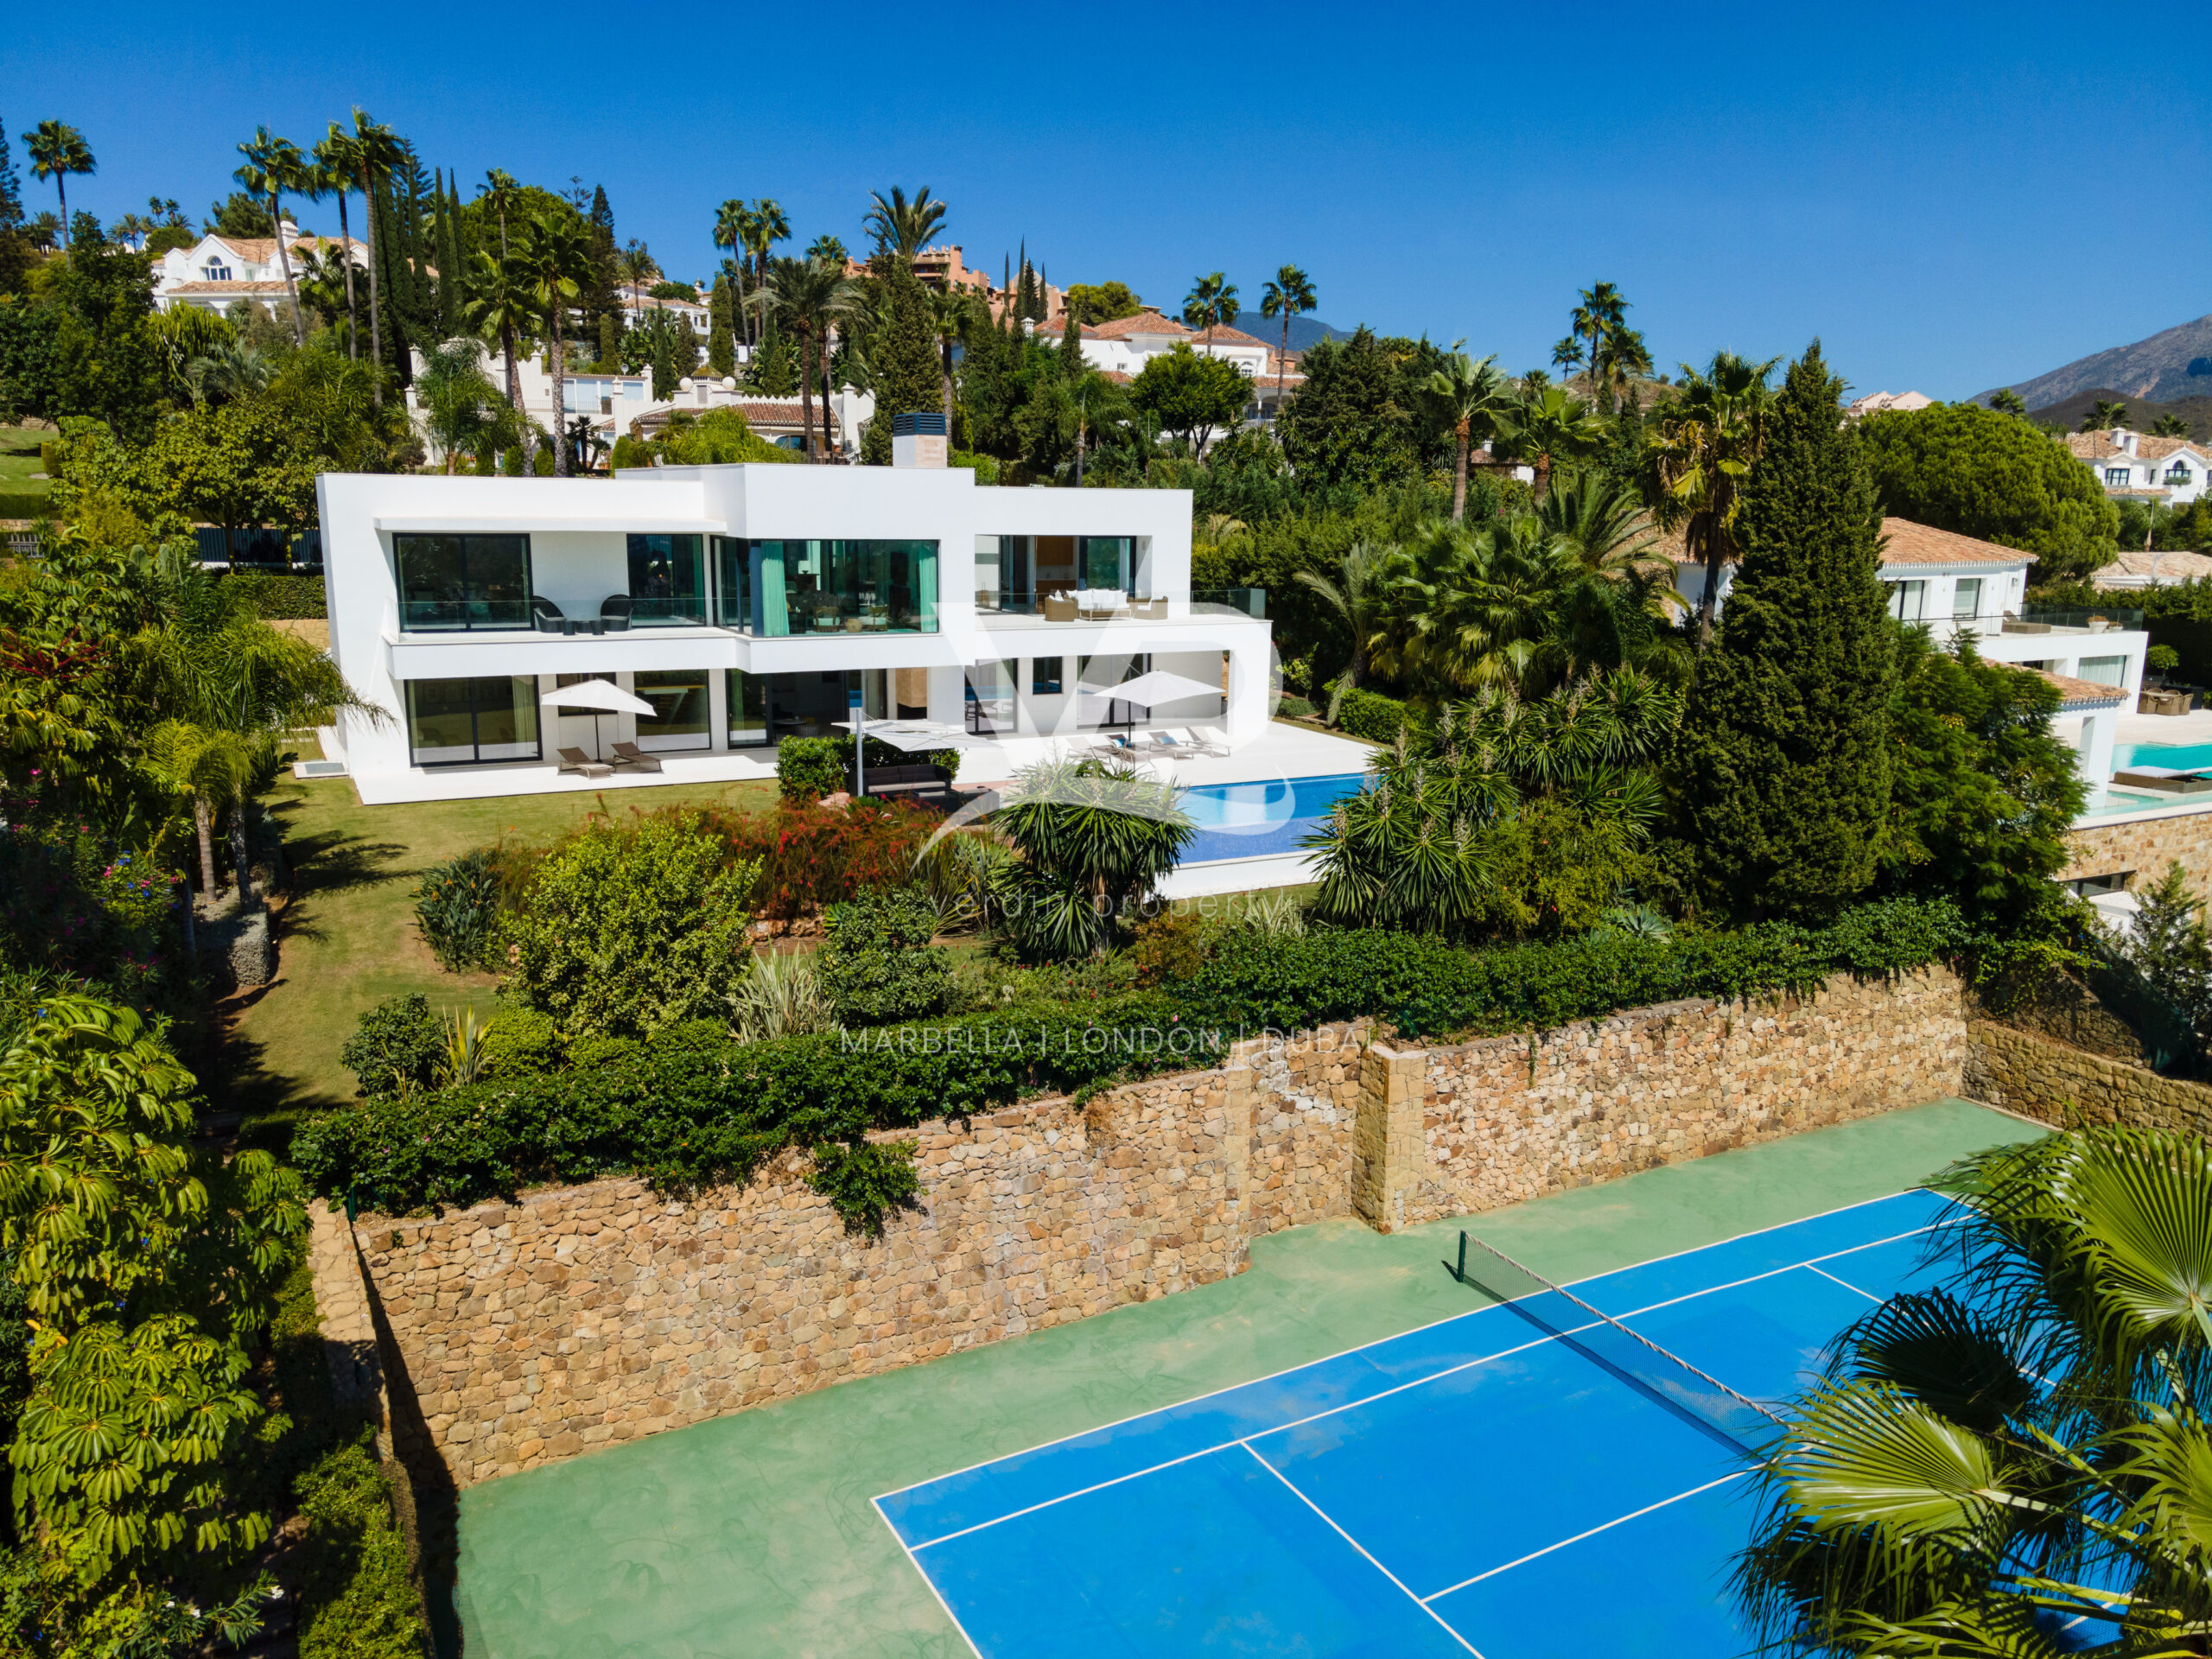 Cerquilla 31, new villa in Nueva Andalucia - Verdin Property